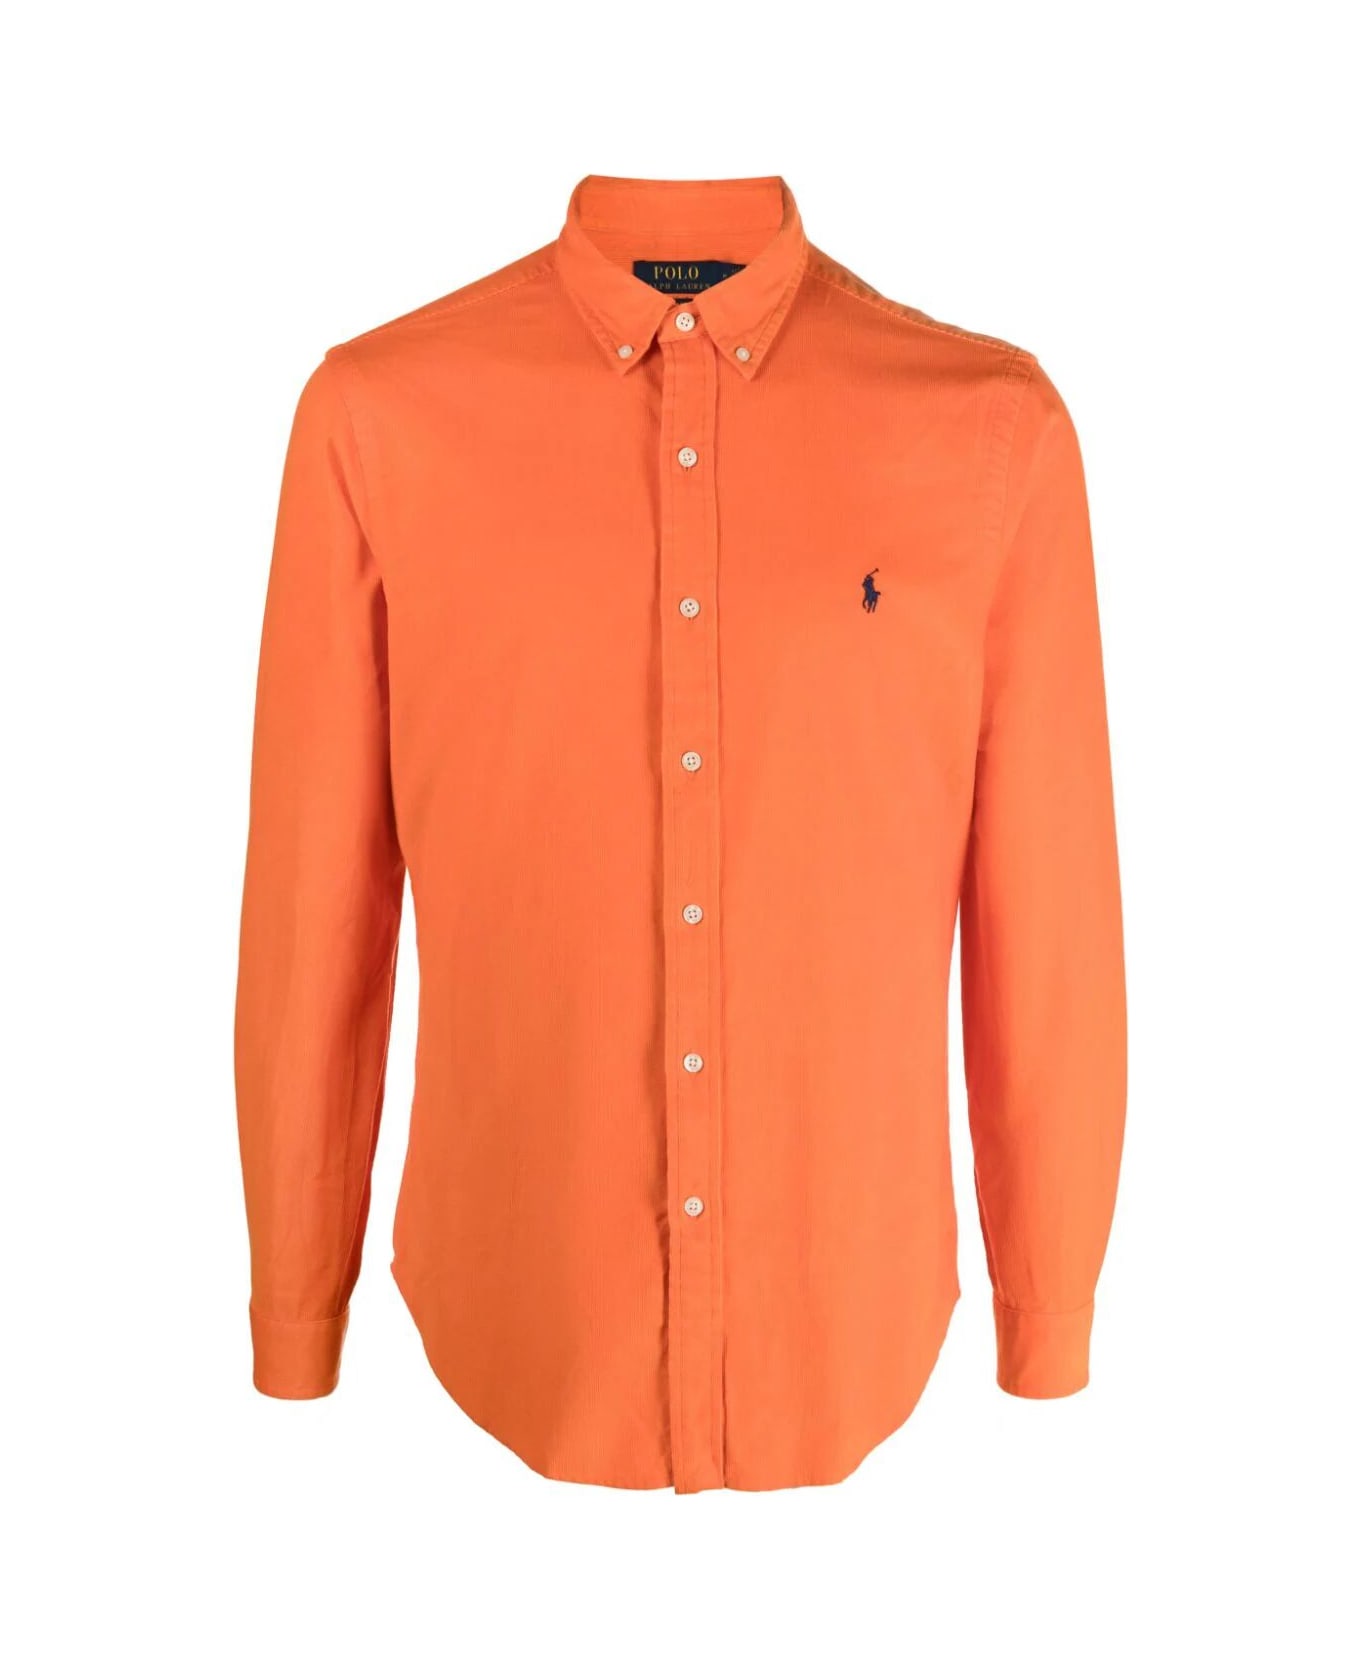 Polo Ralph Lauren Corduroy Long Sleeve Sport Shirt - Spectrum Orange